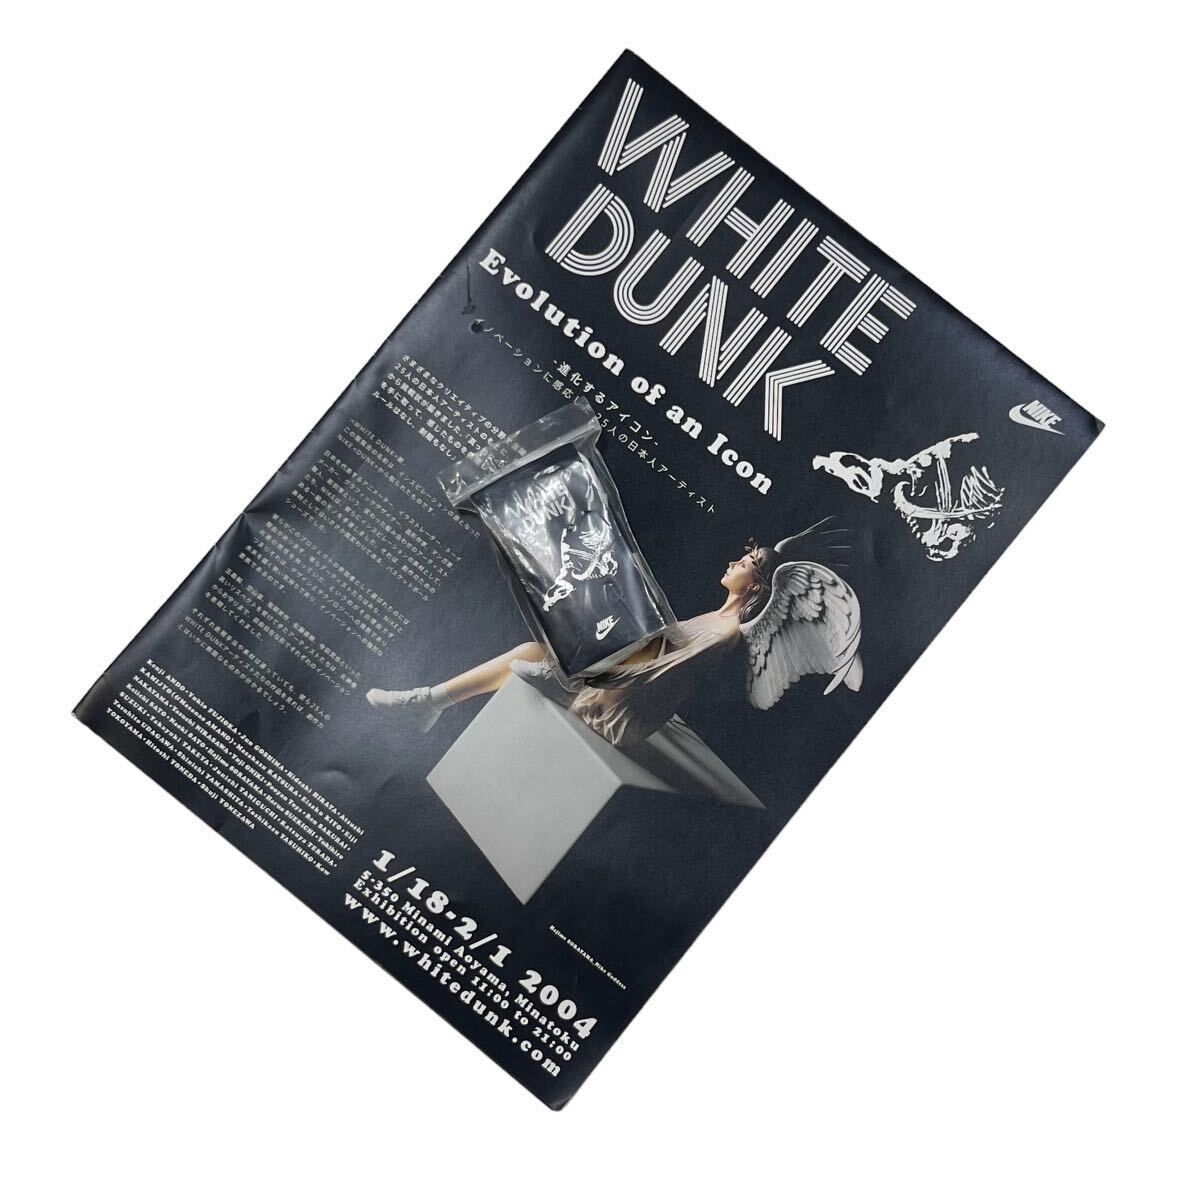 2004 NIKE(ナイキ) WHITE DUNK Evolution of an Icon (ホワイトダンク展) 非売品ポスター&ダンク柄シューレース 藤井ヒロシ